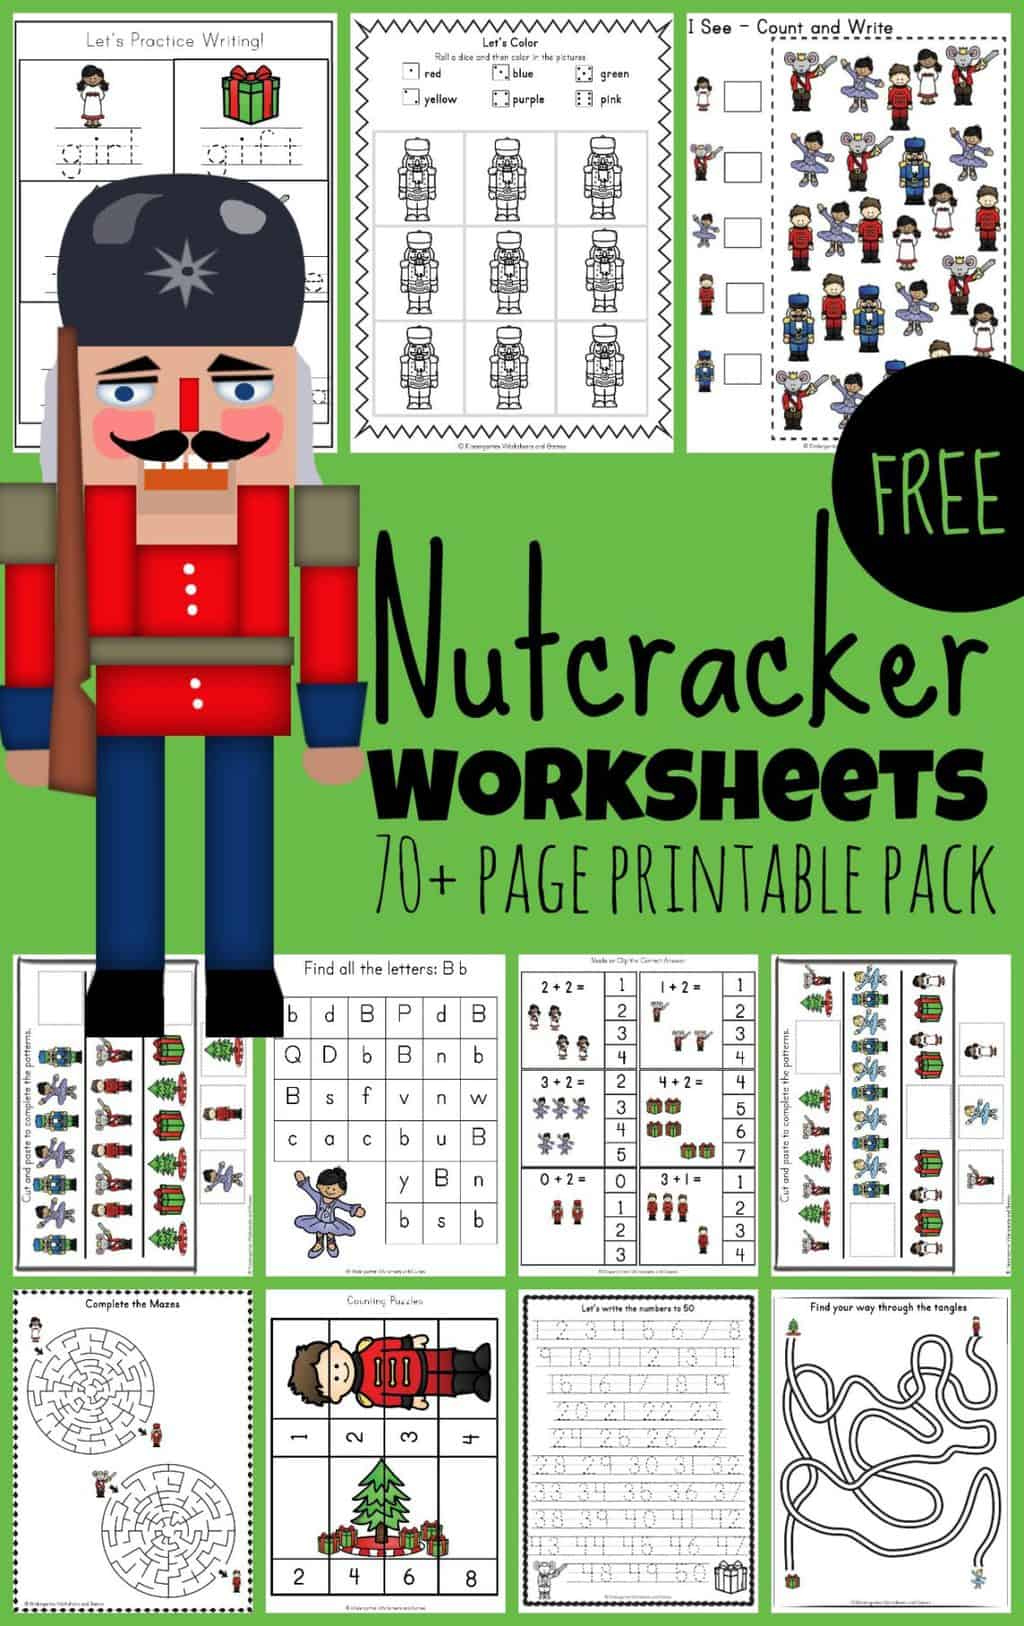 FREE Nutcracker Worksheets Printables Pack